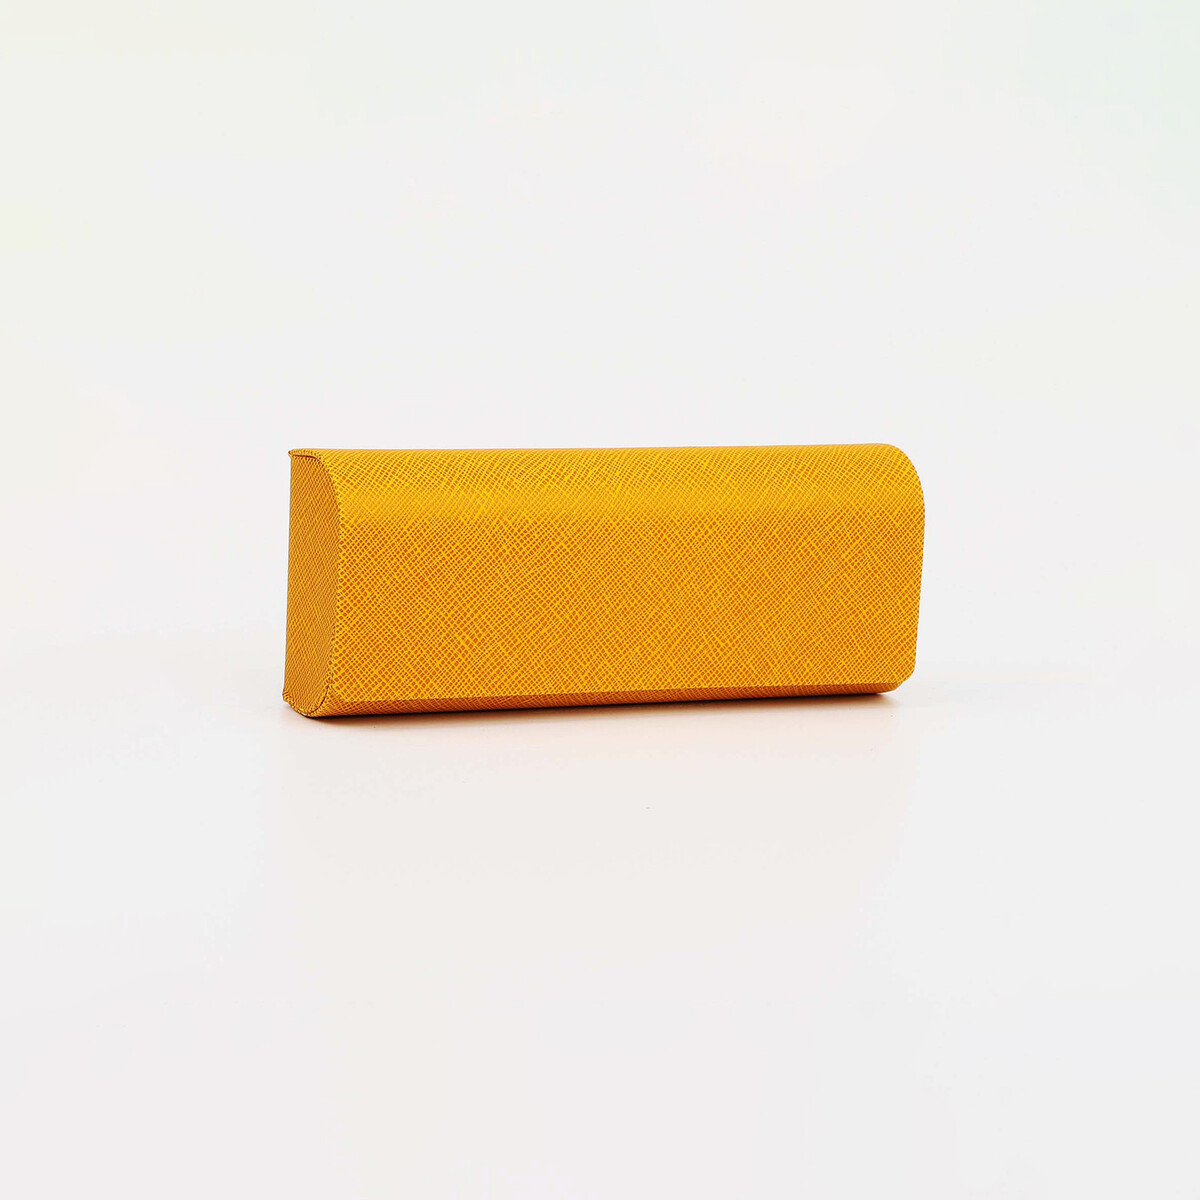 Футляр для очков на магните, 15.5 см х 3 см х 6 см, салфетка, цвет желтый футляр для очков на магните 15 5 см х 3 5 см х 6 см салфетка оранжевый